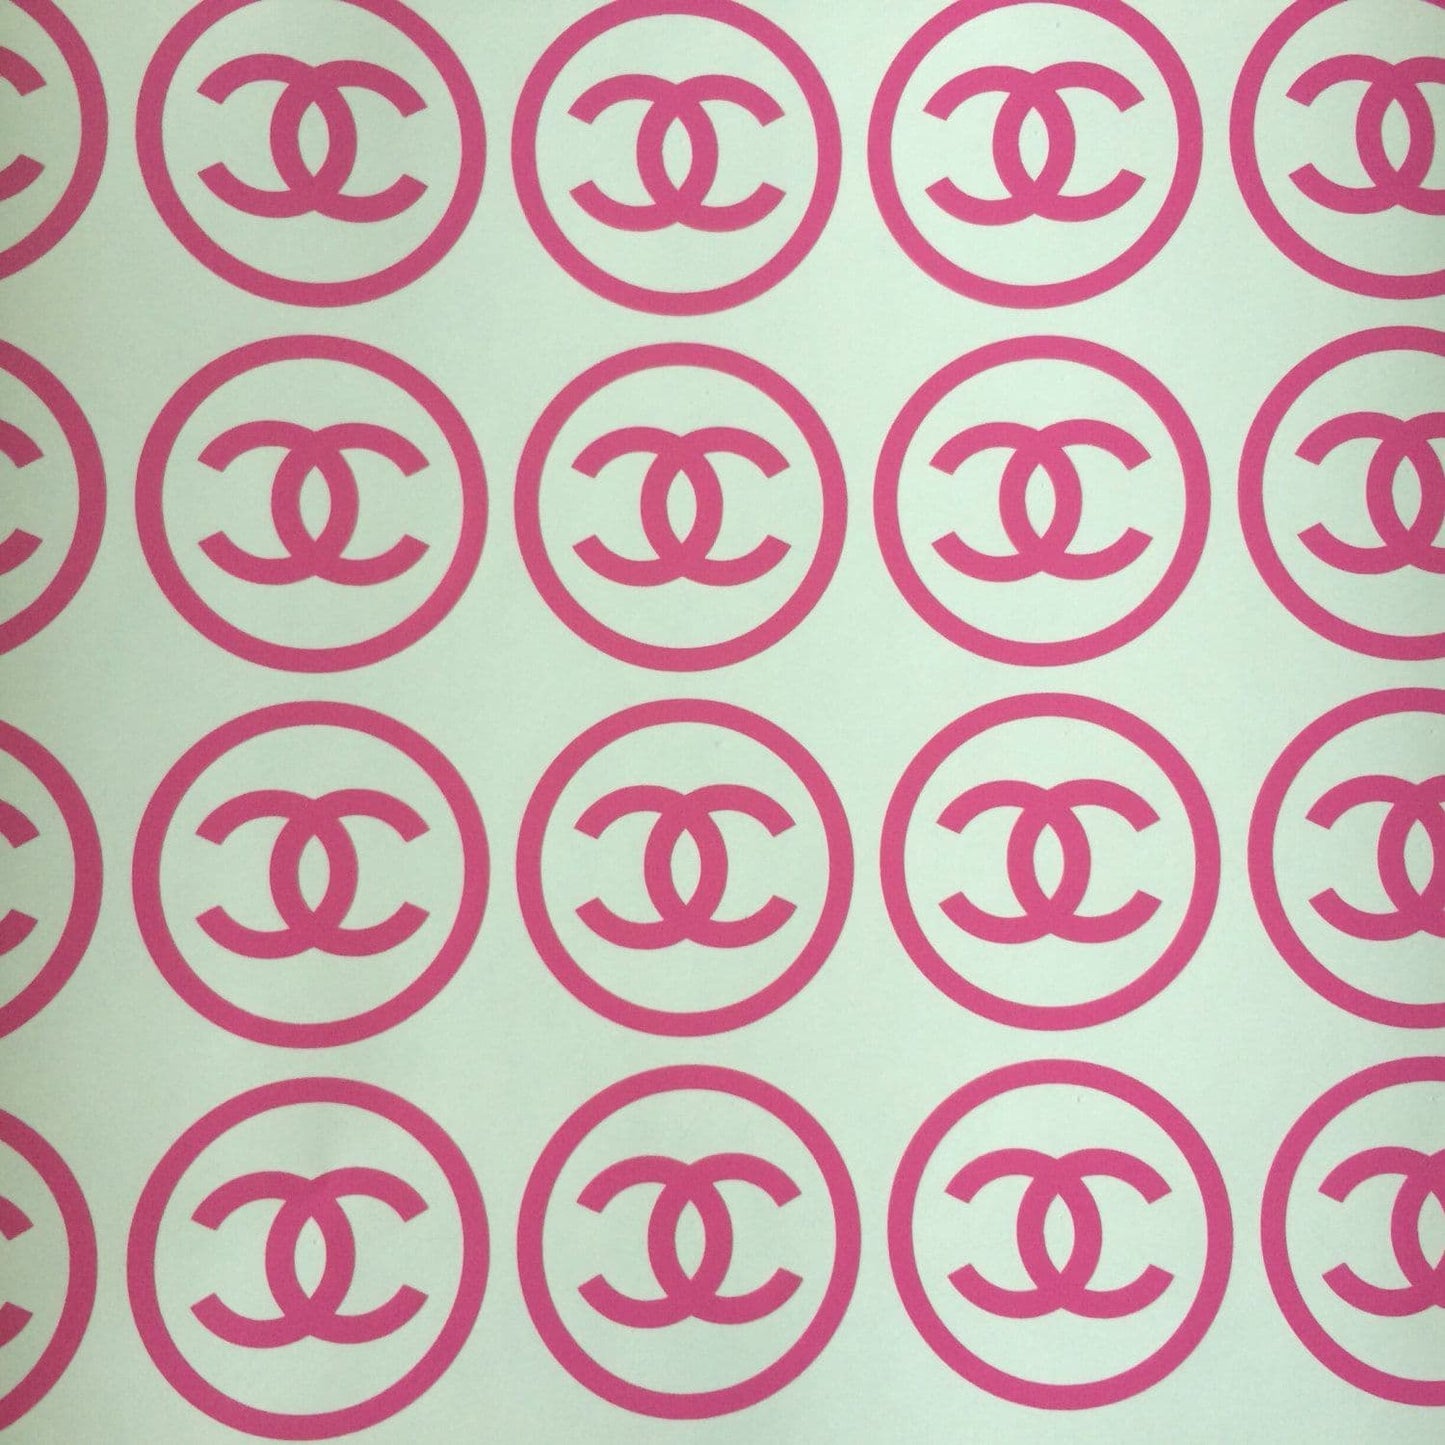 20  Chanel Stickers - Circle Logo